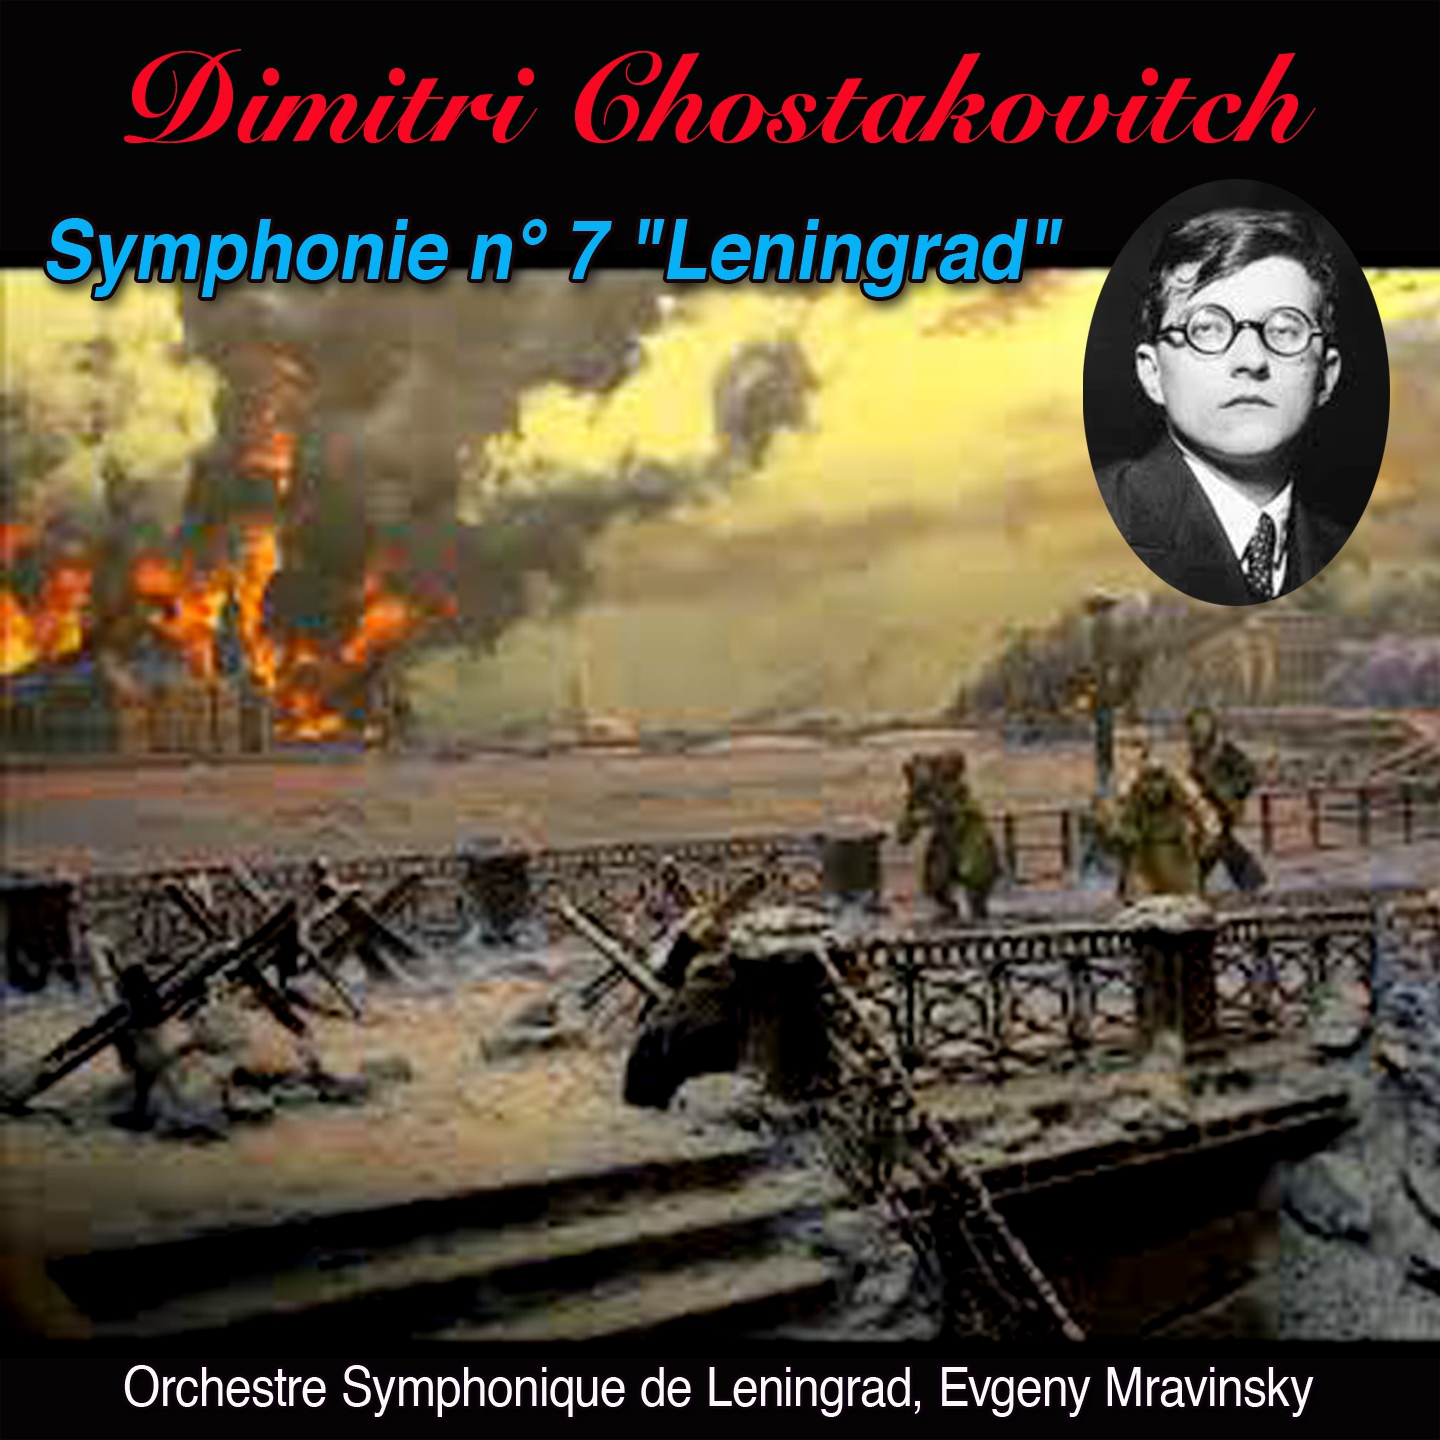 Leningrad moderato (Symphonie n° 7 op. 60 en ut majeur "Leningrad")